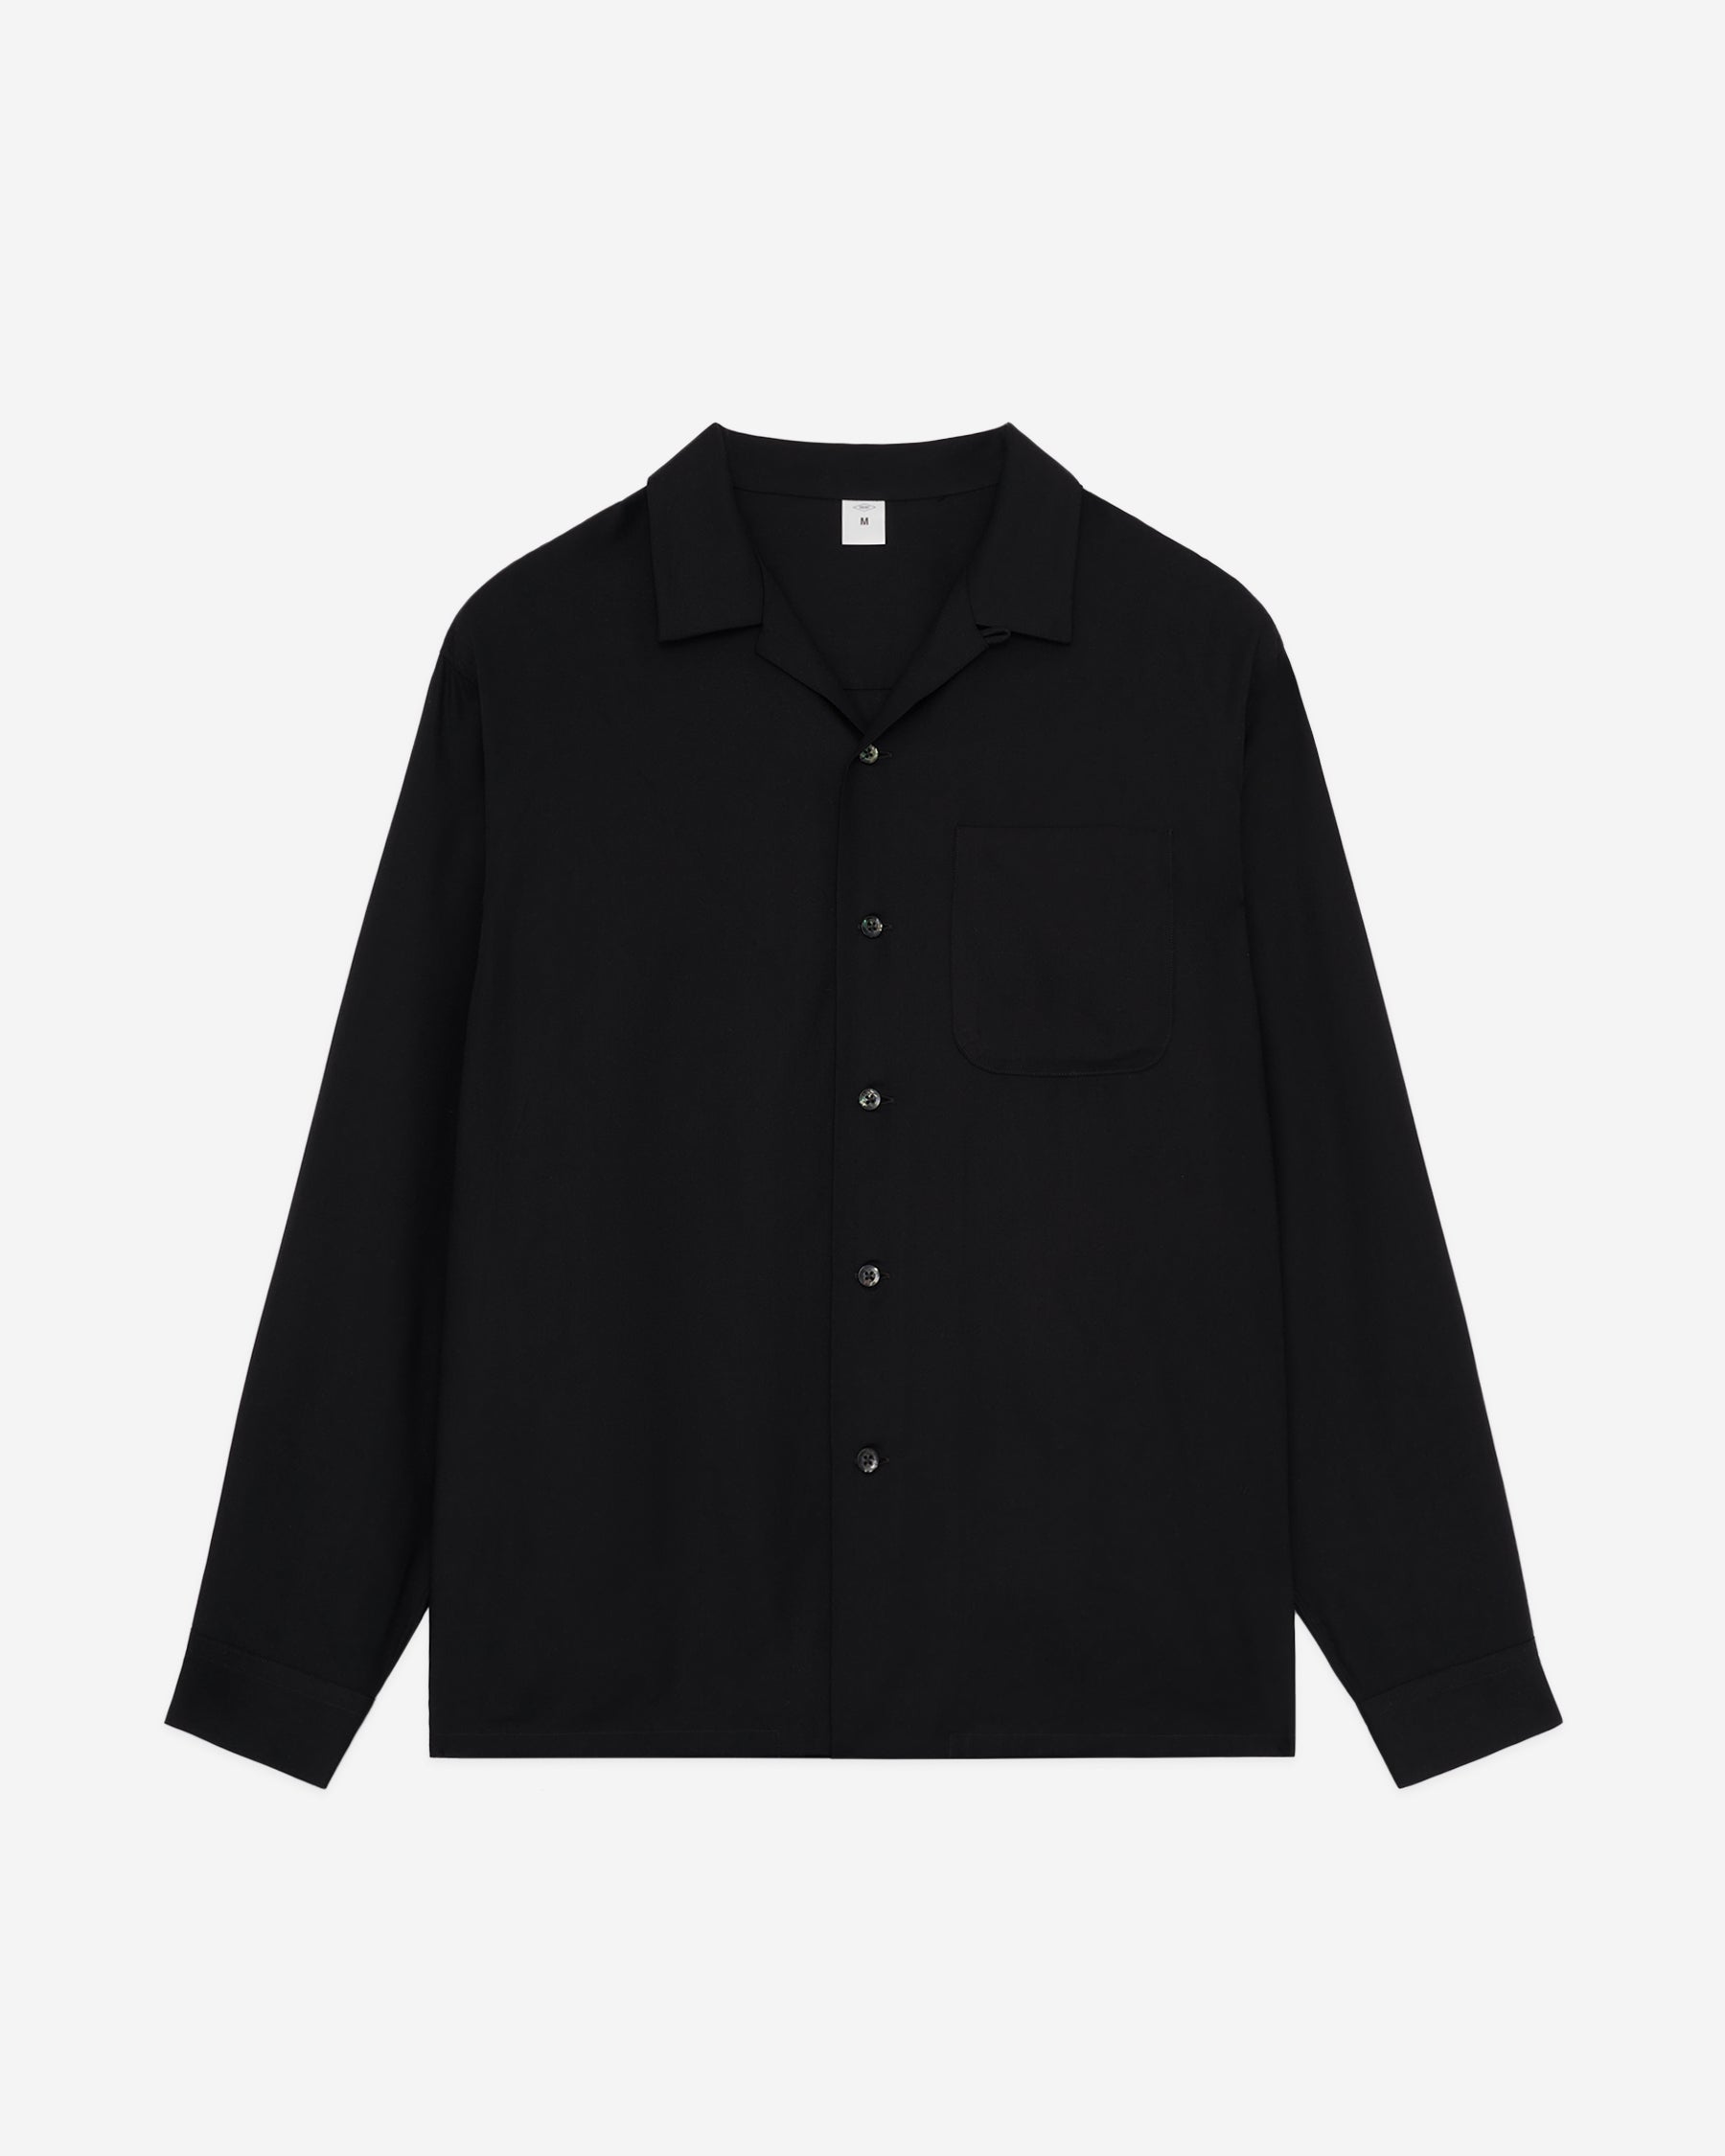 FRONT 11201 Original Black Open Collar Rayon Shirt Made in Japan